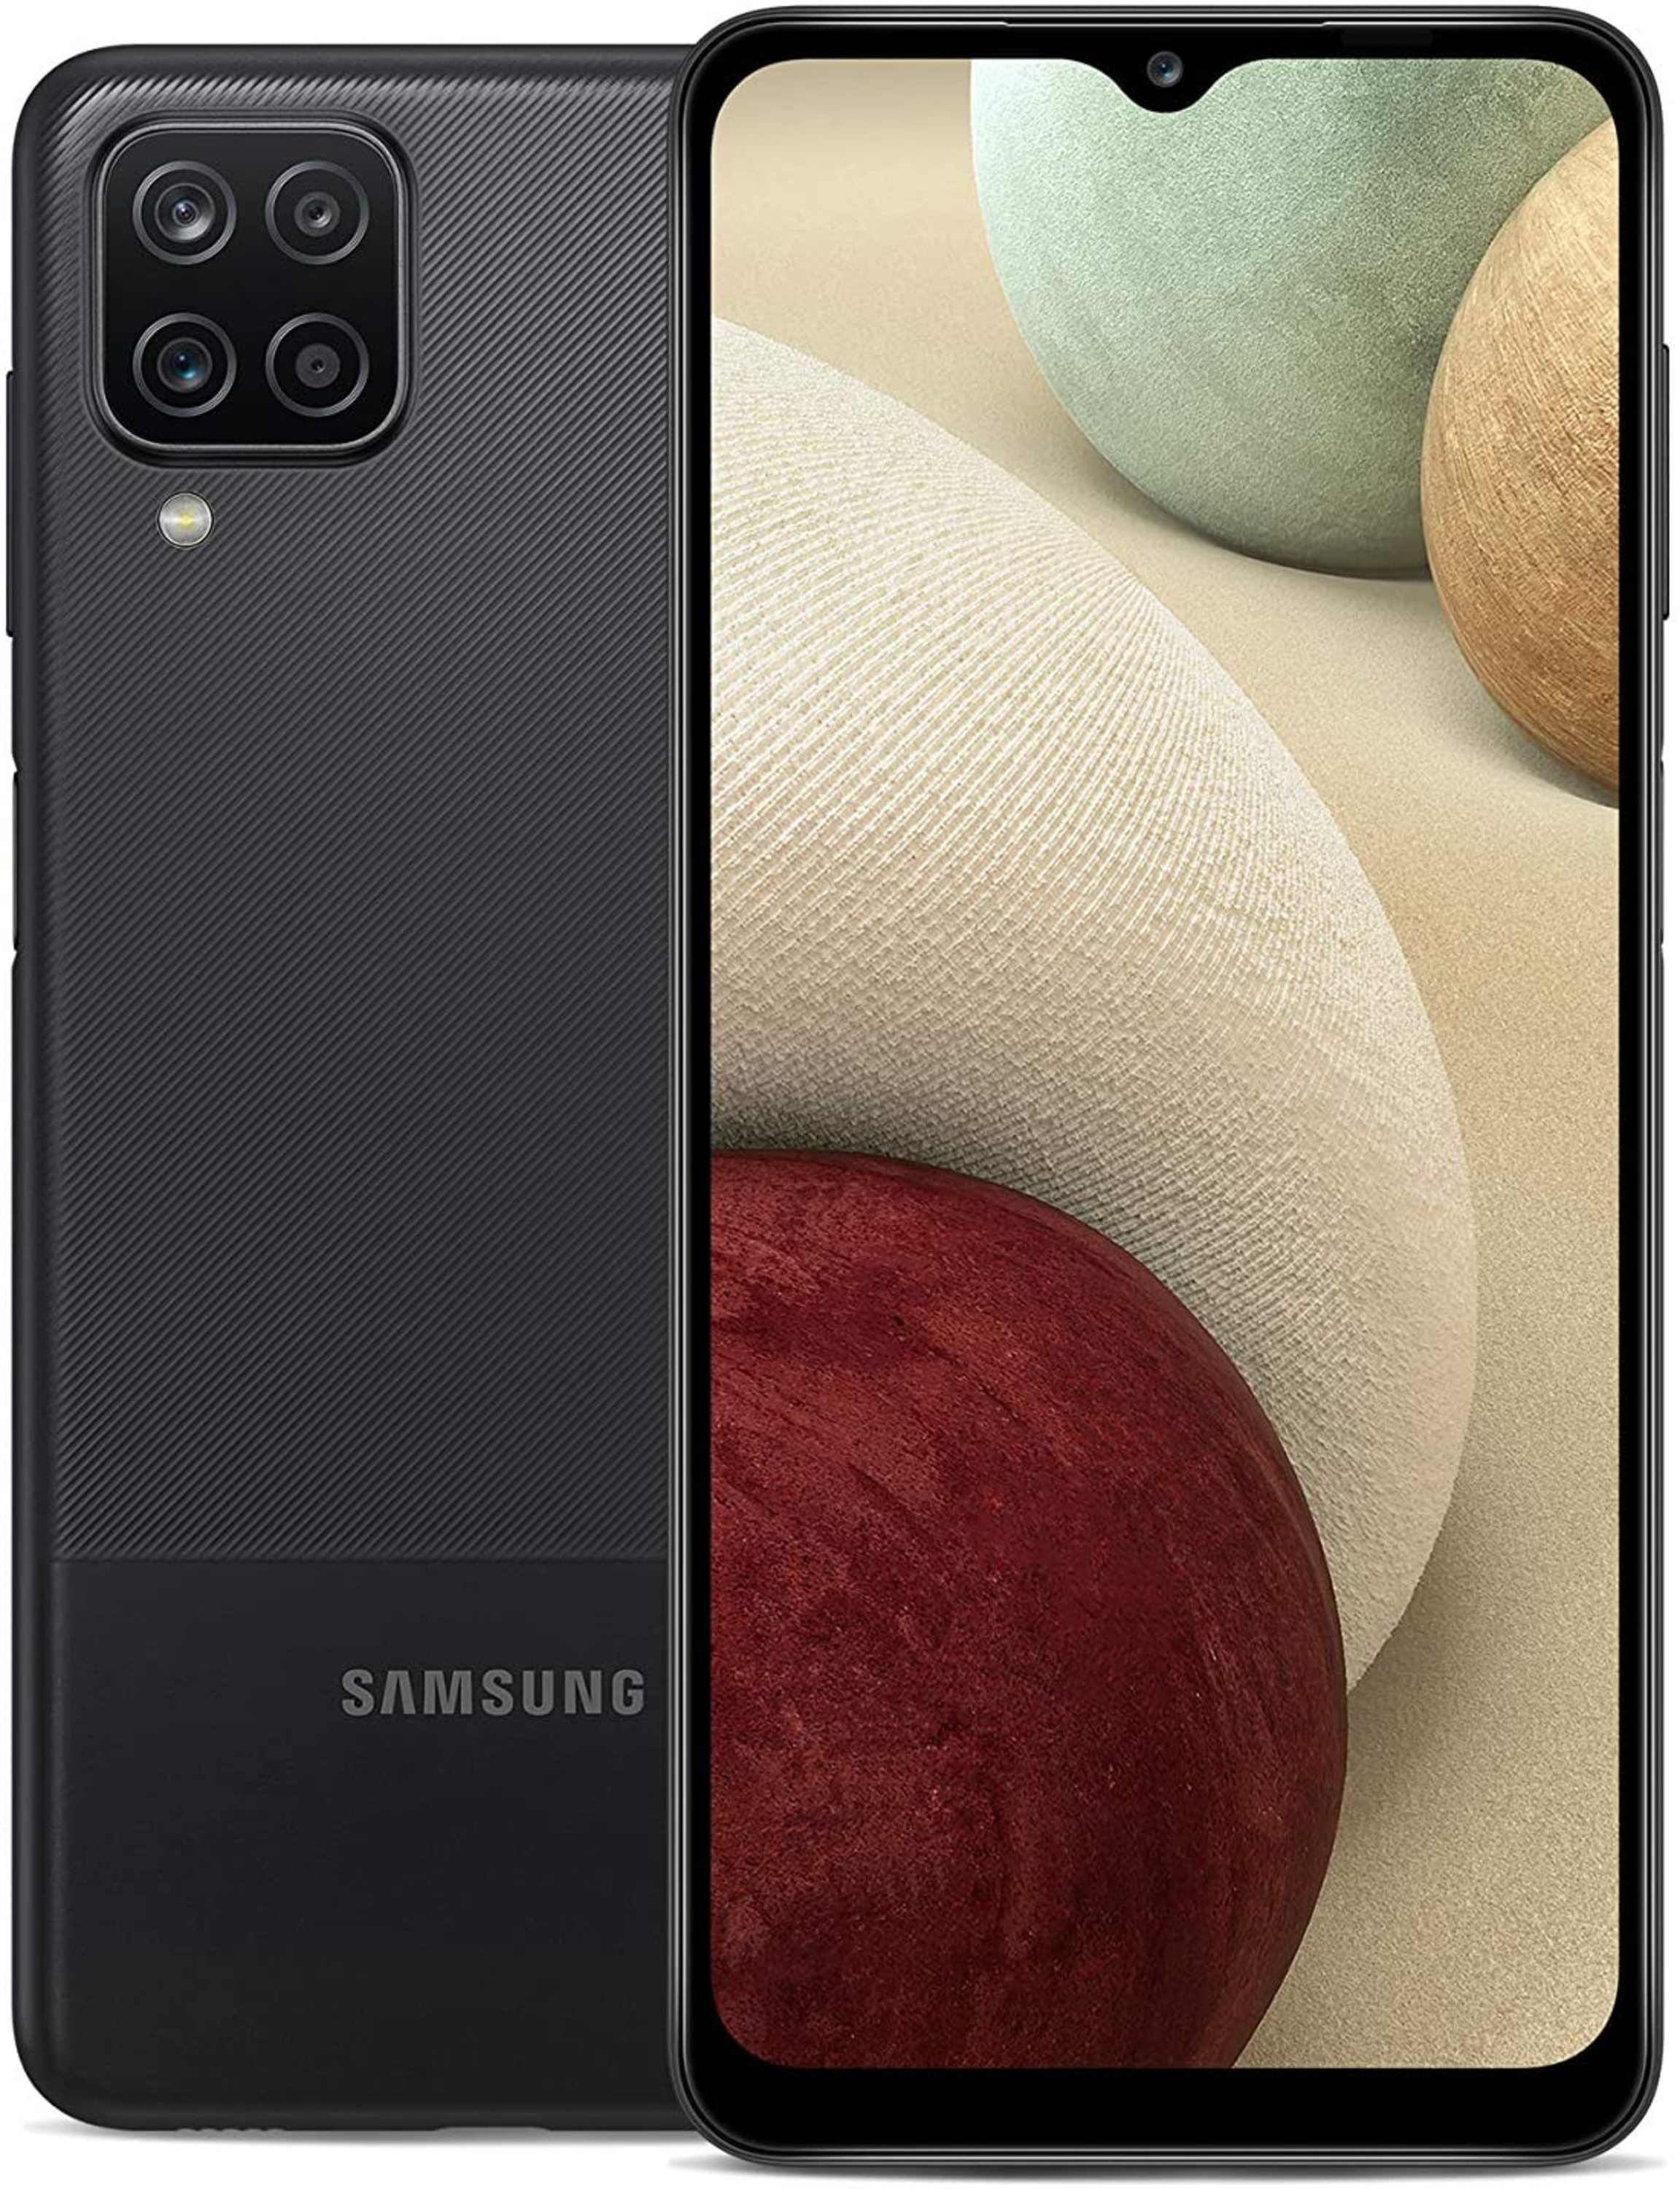 SAMSUNG Galaxy A12 A125U 32GB GSM / CDMA Unlocked Android Smartphone (US Version), Black - image 2 of 10